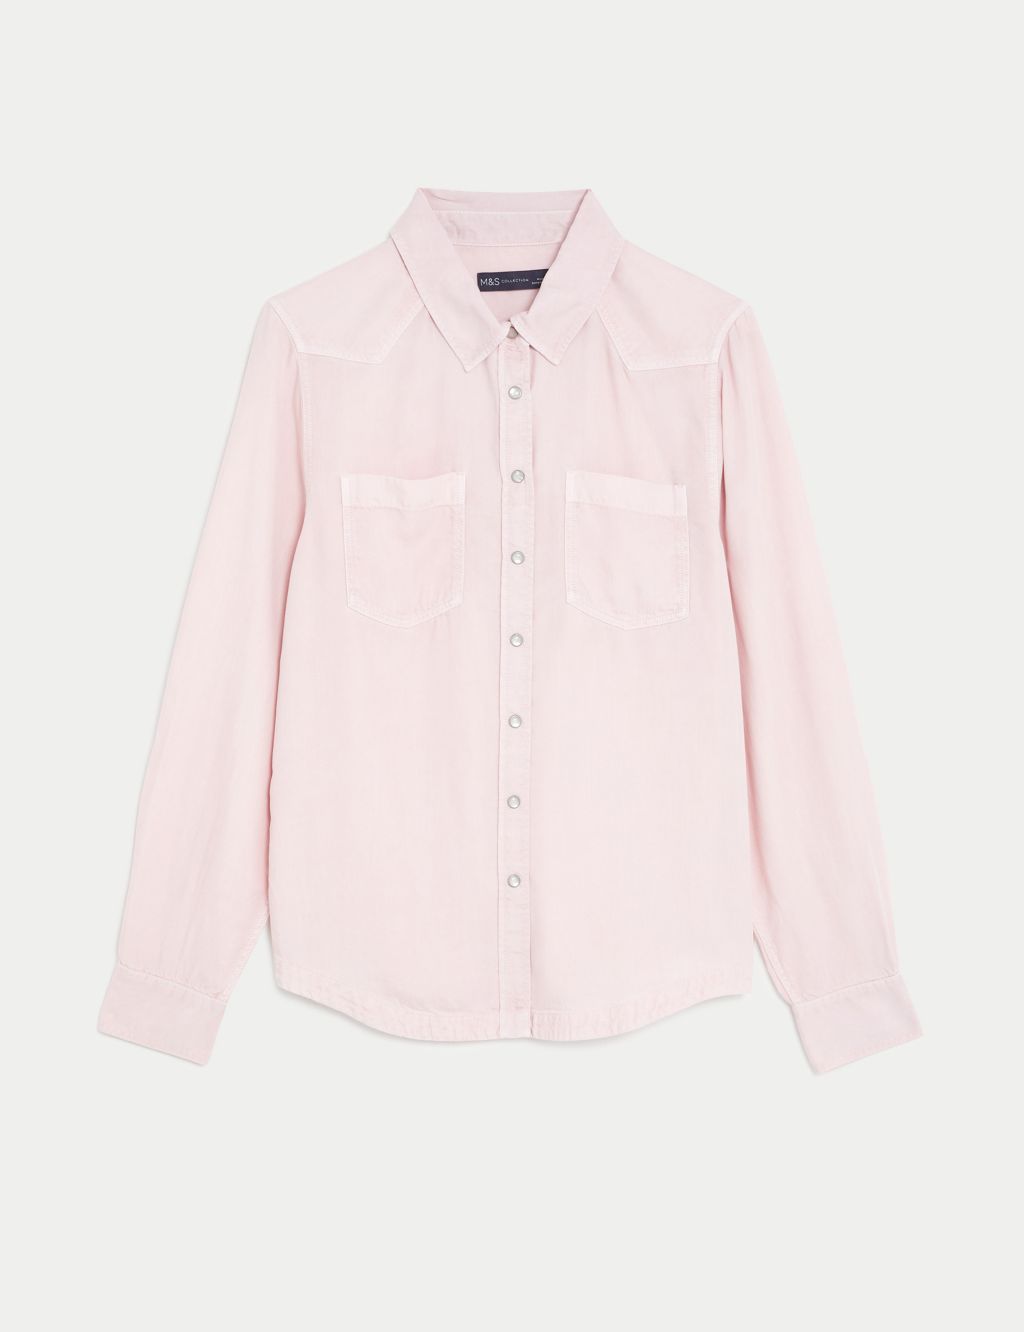 Women's Pink Shirts & Blouses